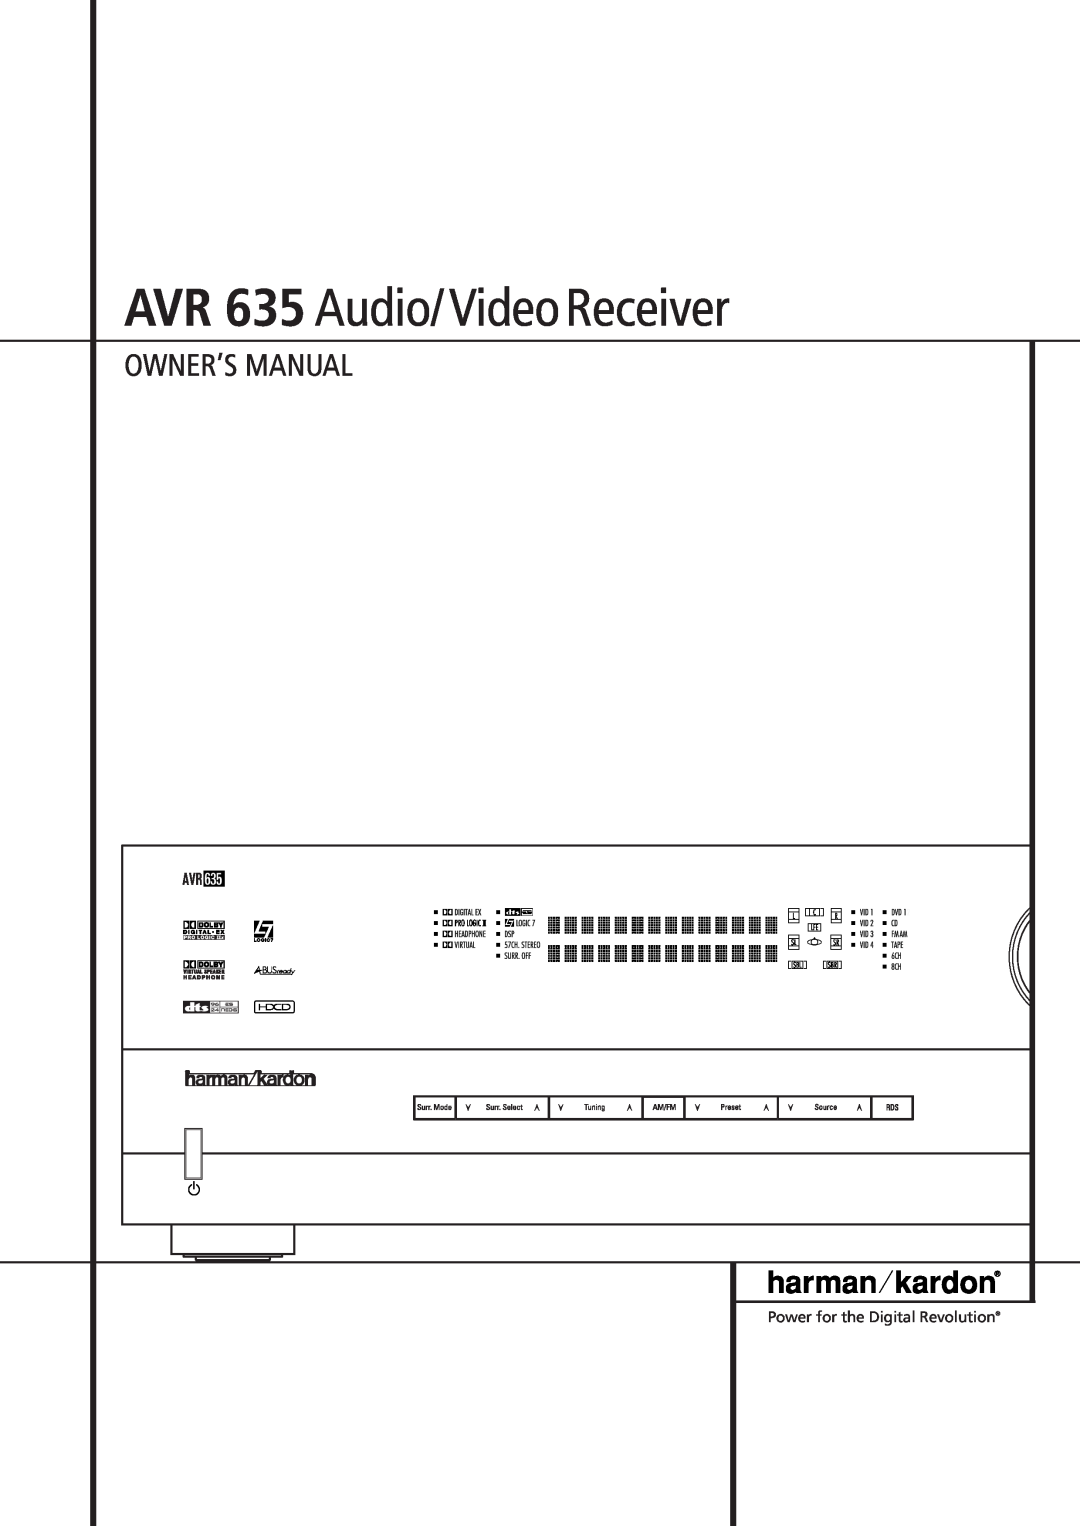 Pacific Digital owner manual AVR 635 Audio/ Video Receiver, Owner’S Manual 